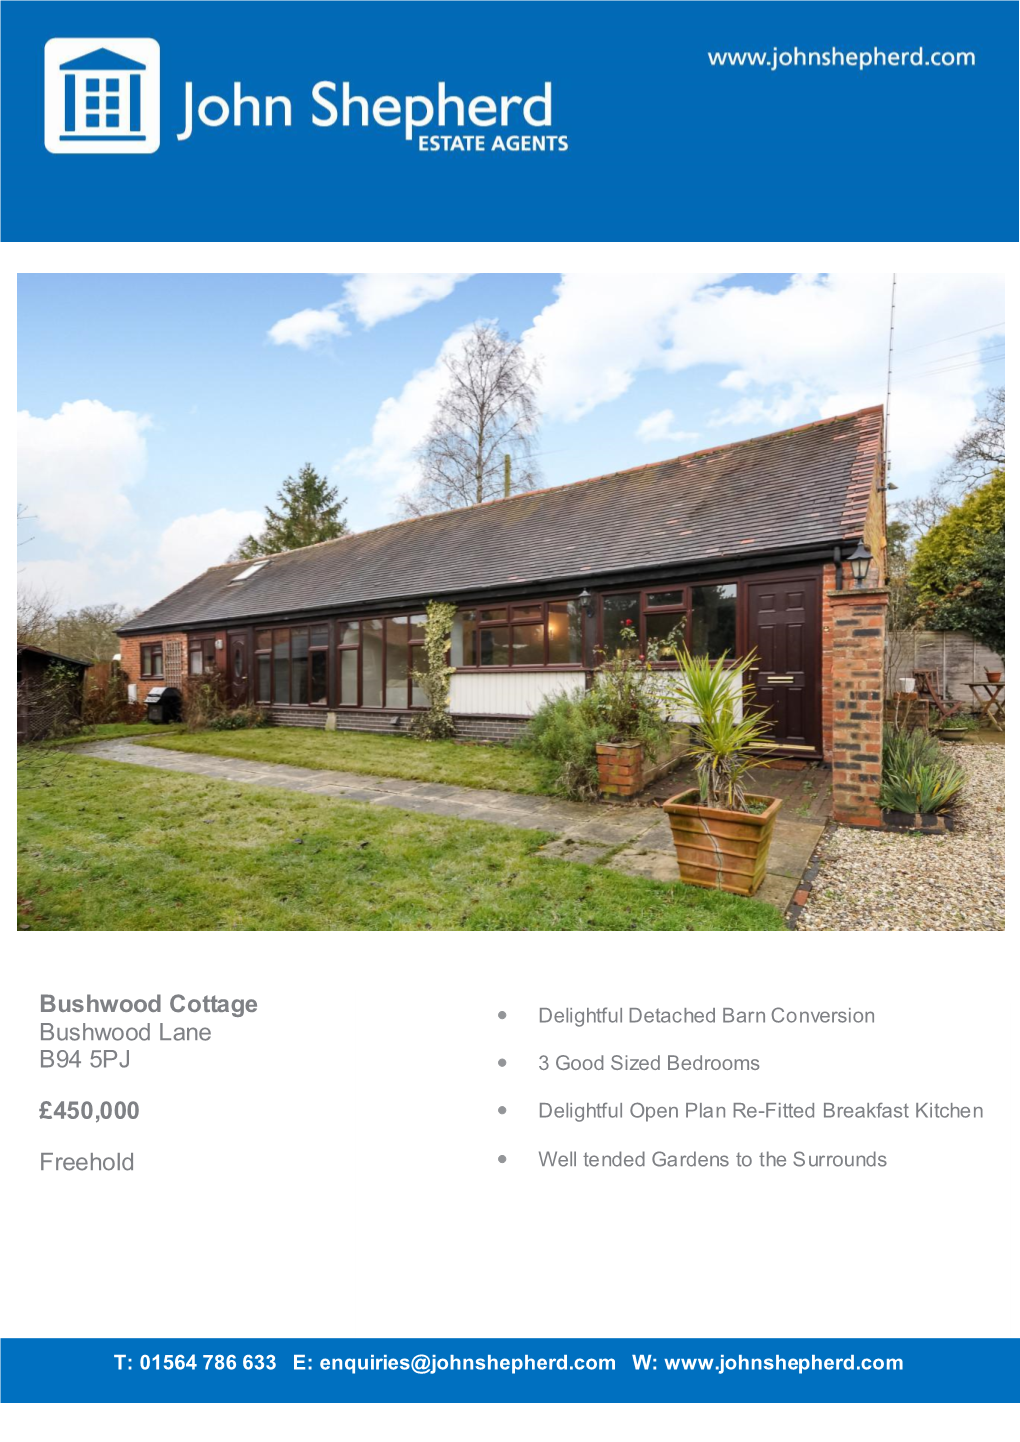 Bushwood Cottage Bushwood Lane B94 5PJ £450,000 Freehold